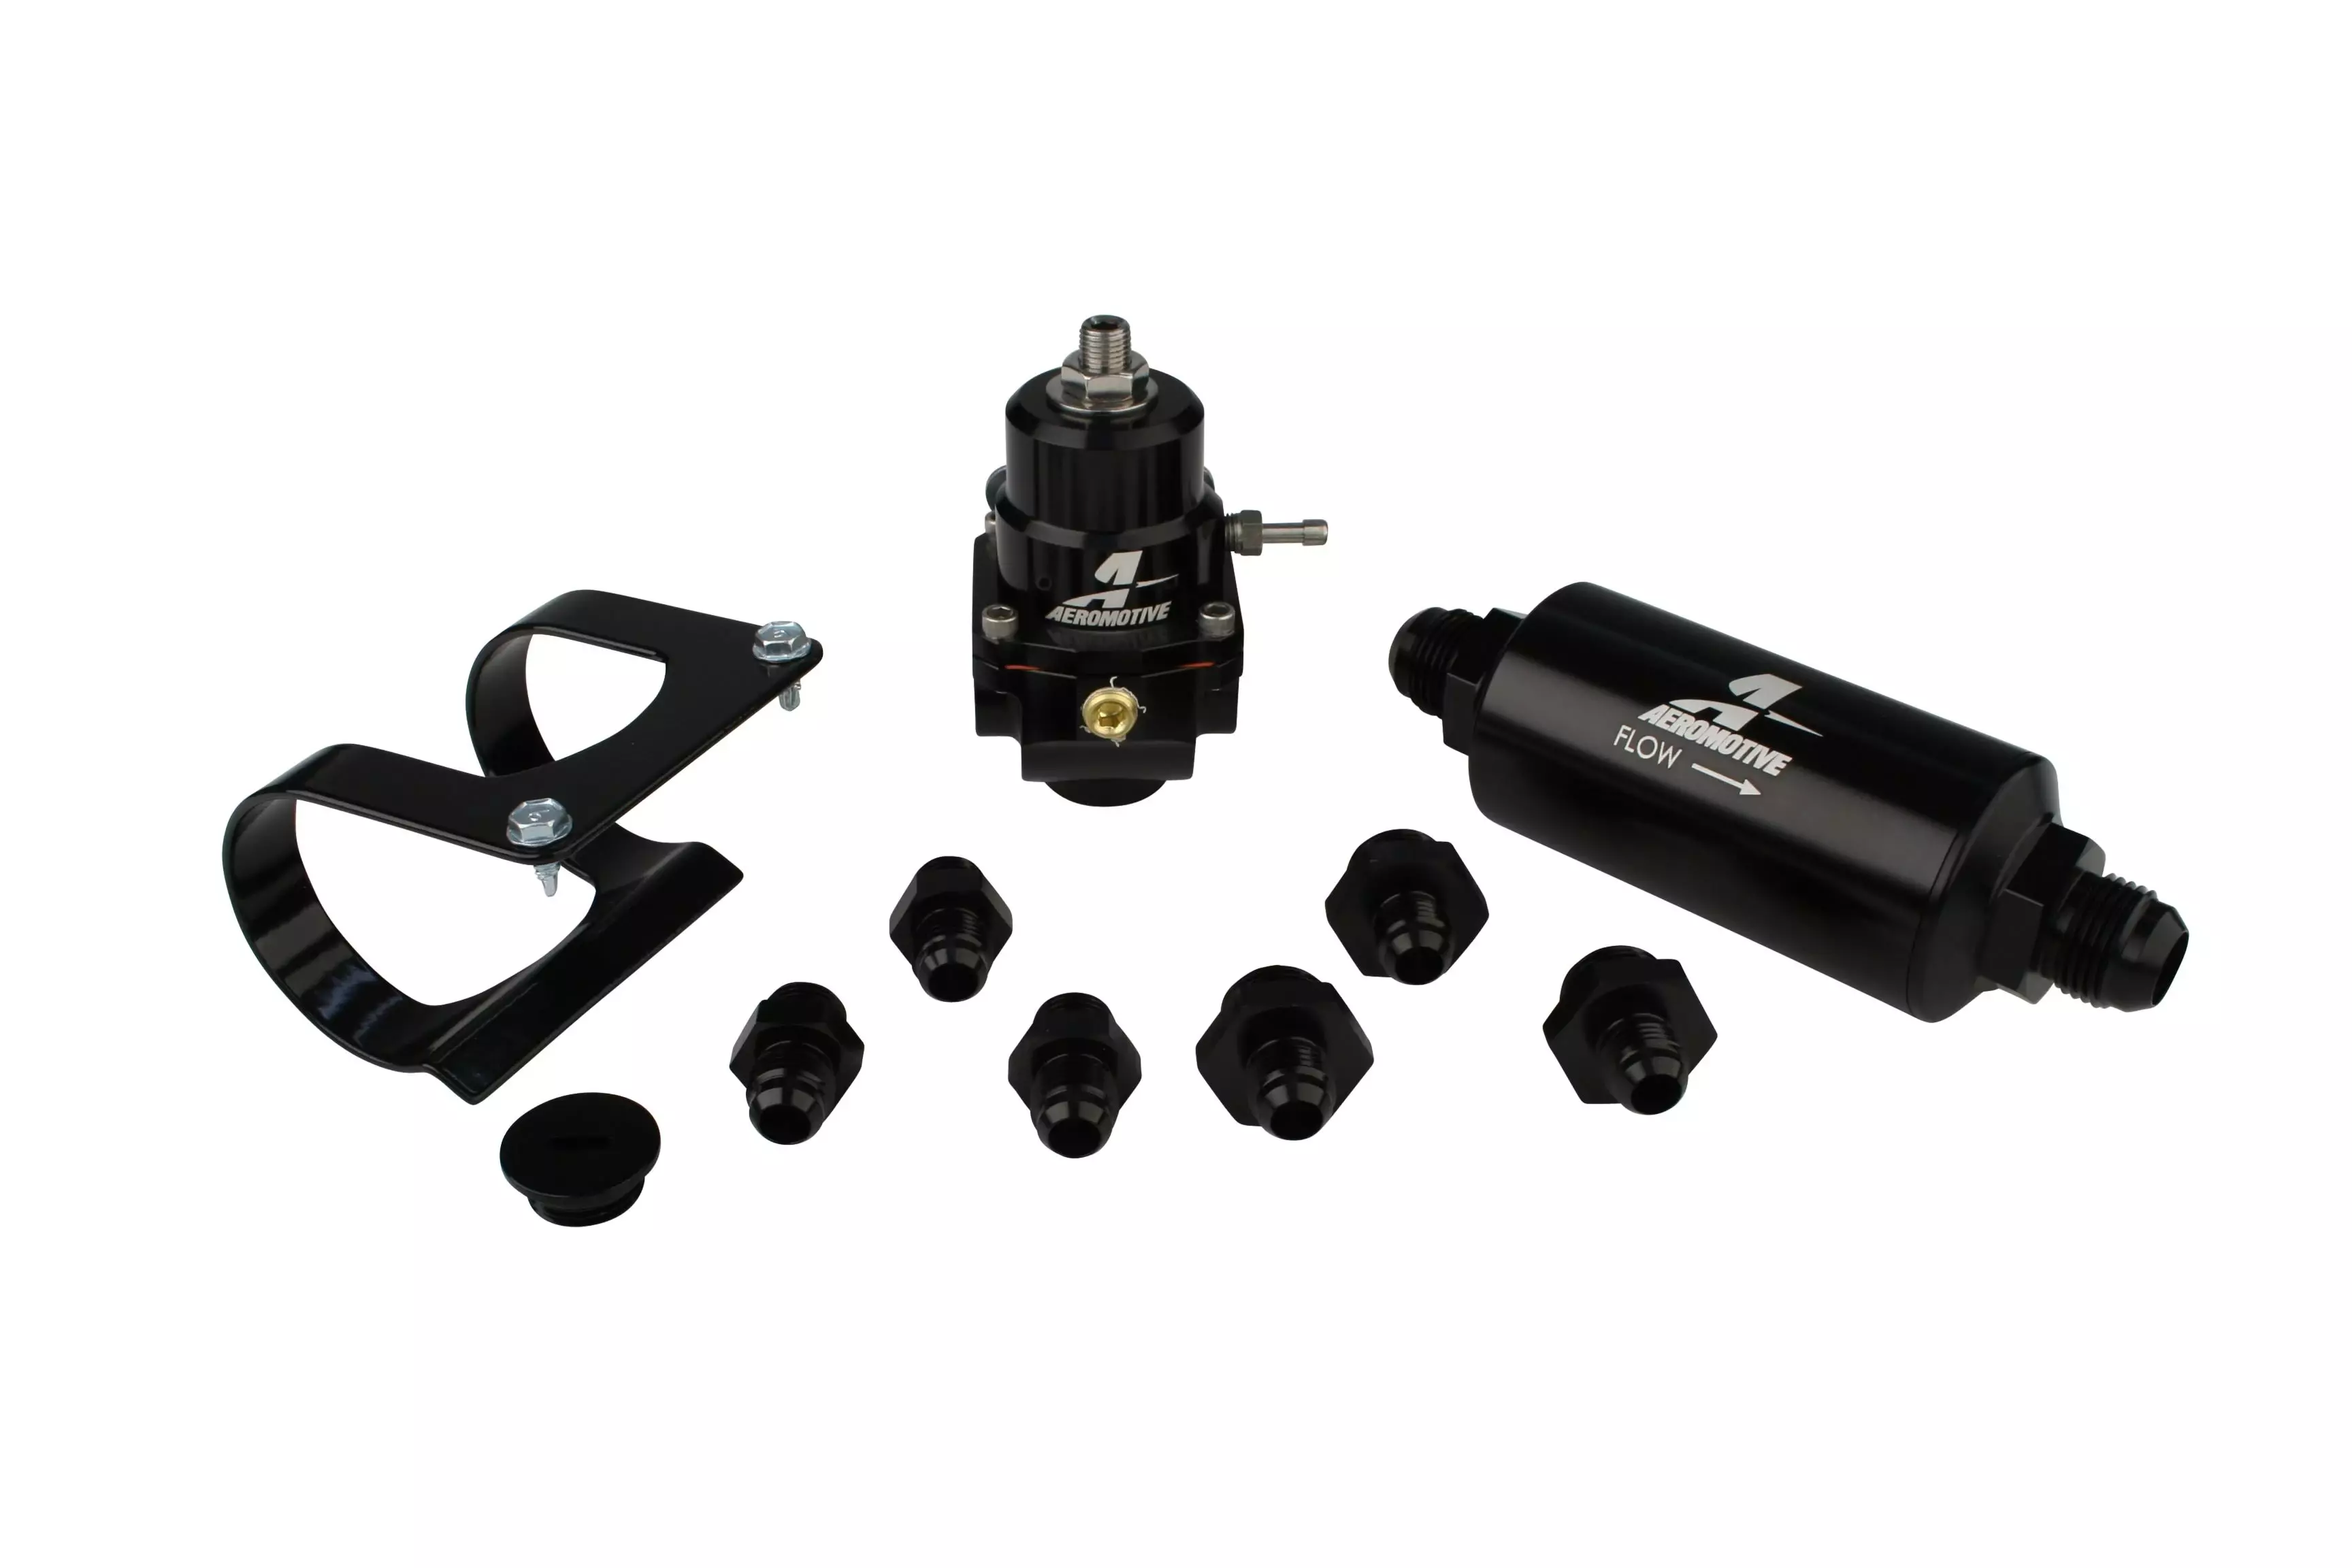 Aeromotive 17352 Fuel System, X1-Series, Bracket / Fittings / Filter / Gauge / Regulator, 8 AN, Black, Kit